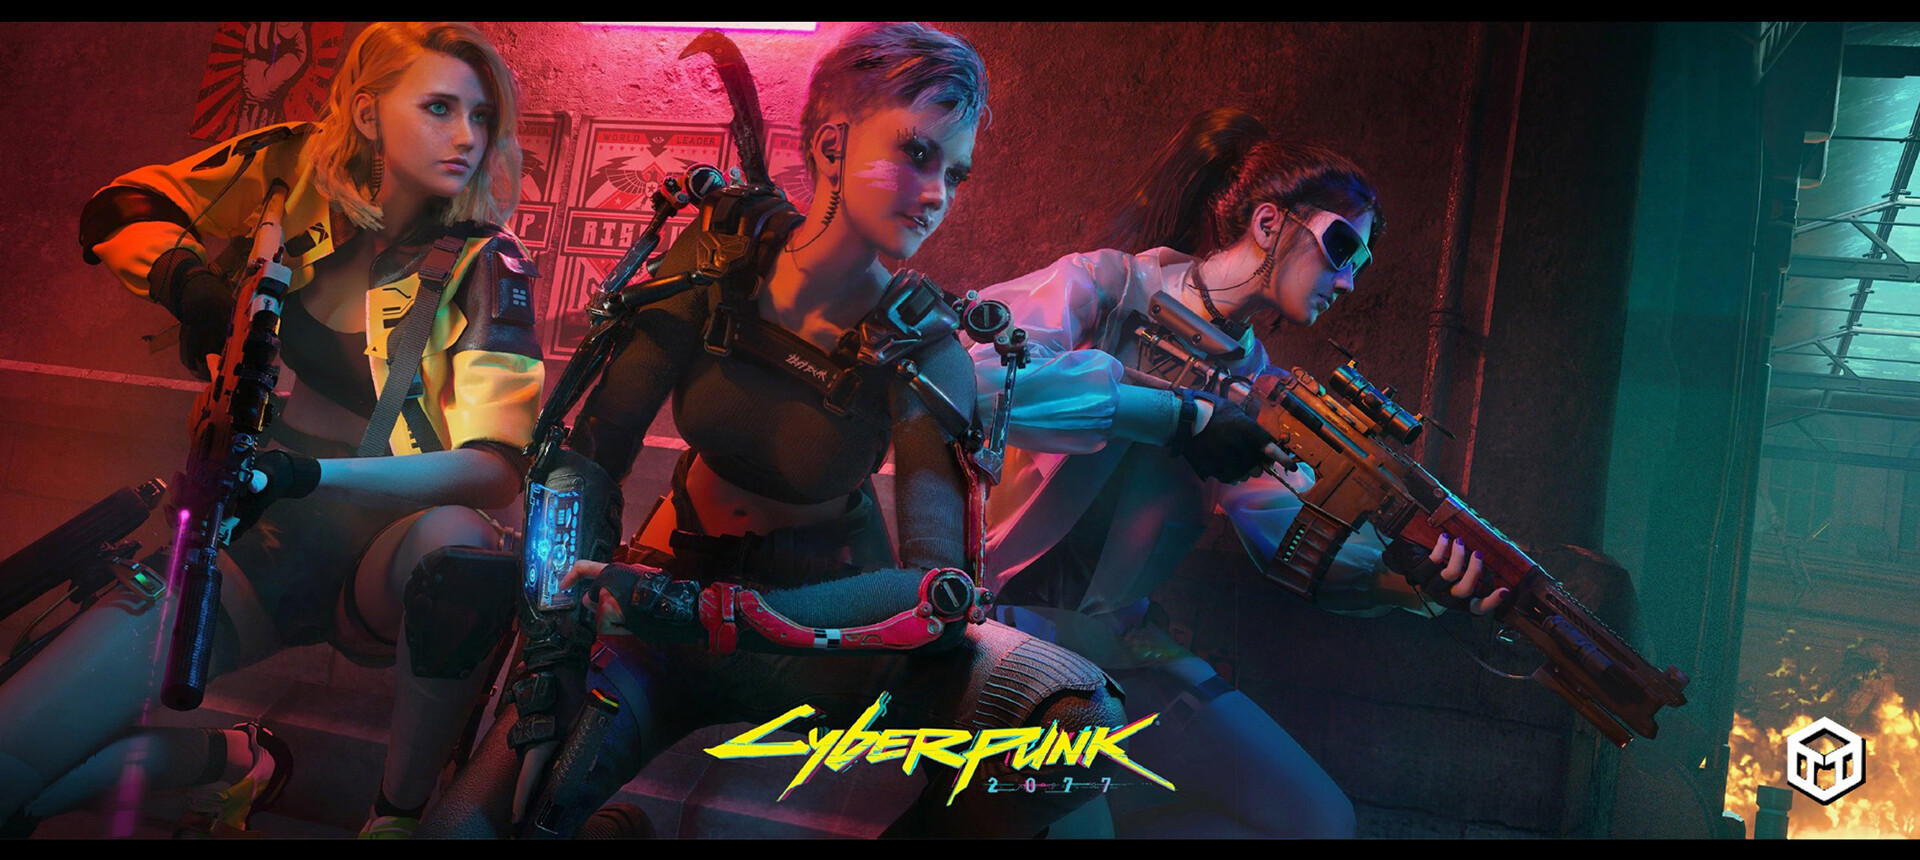 Cyberpunk 2077 Video Games PC Gaming Video Game Girls Girls With Guns Video Game Art Wallpaper:1920x860